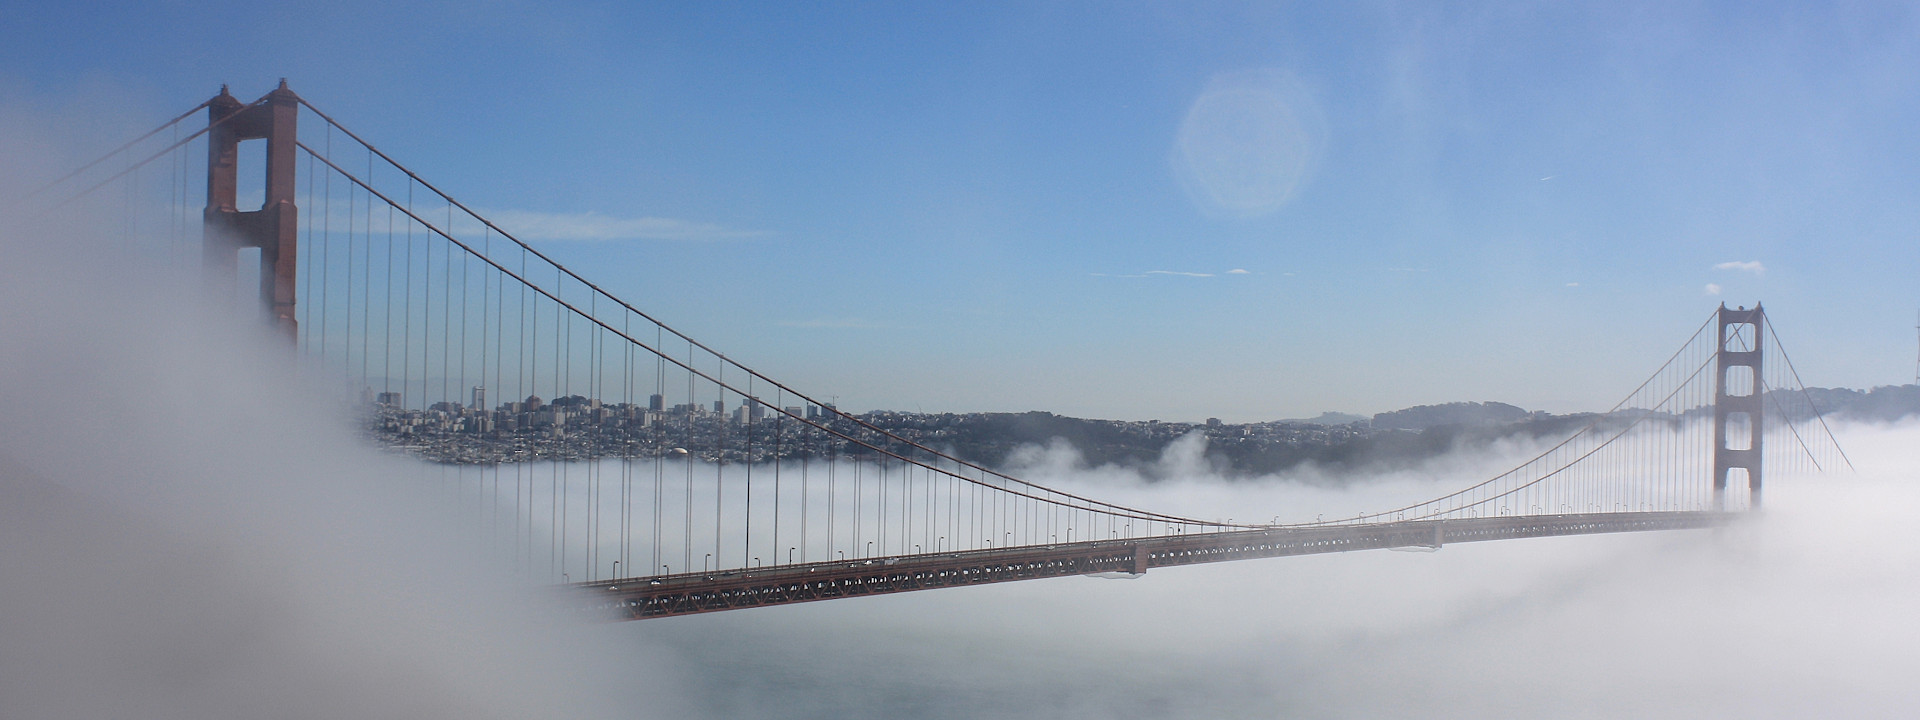 A misty view of the Golden Gate Bridge - photo via Flickr: Mark Gunn